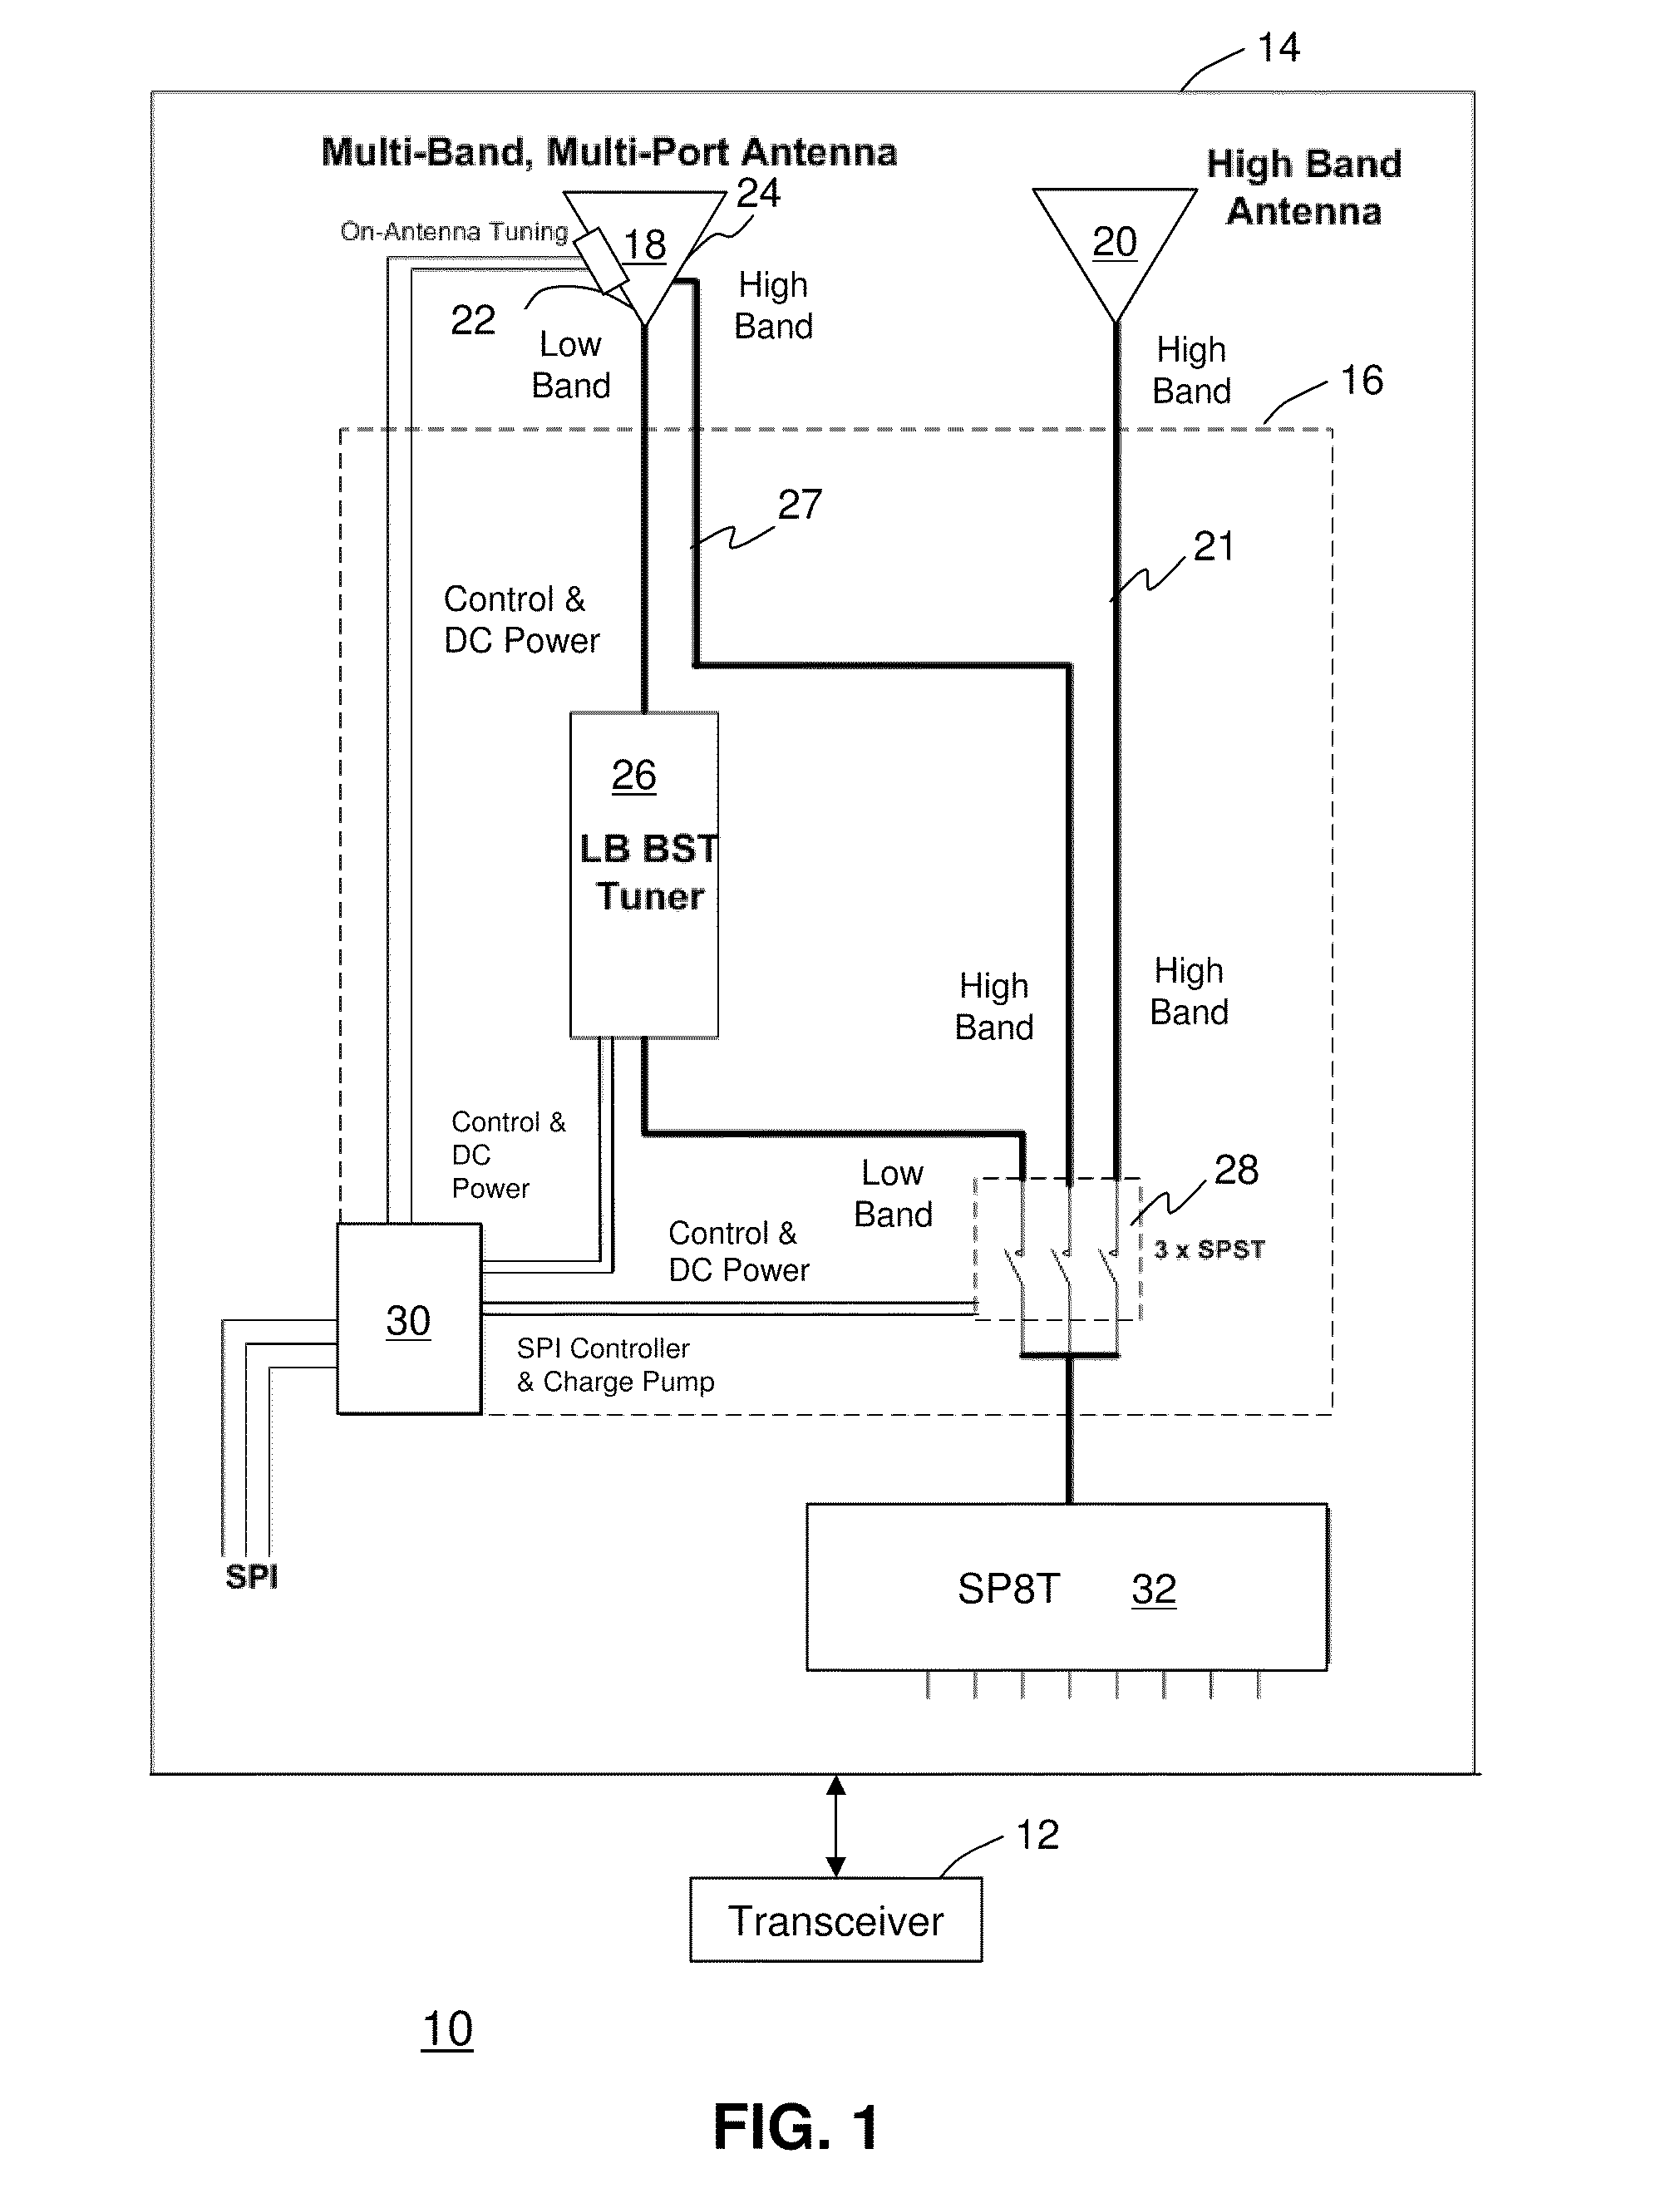 Antenna arrangement for multimode communication device